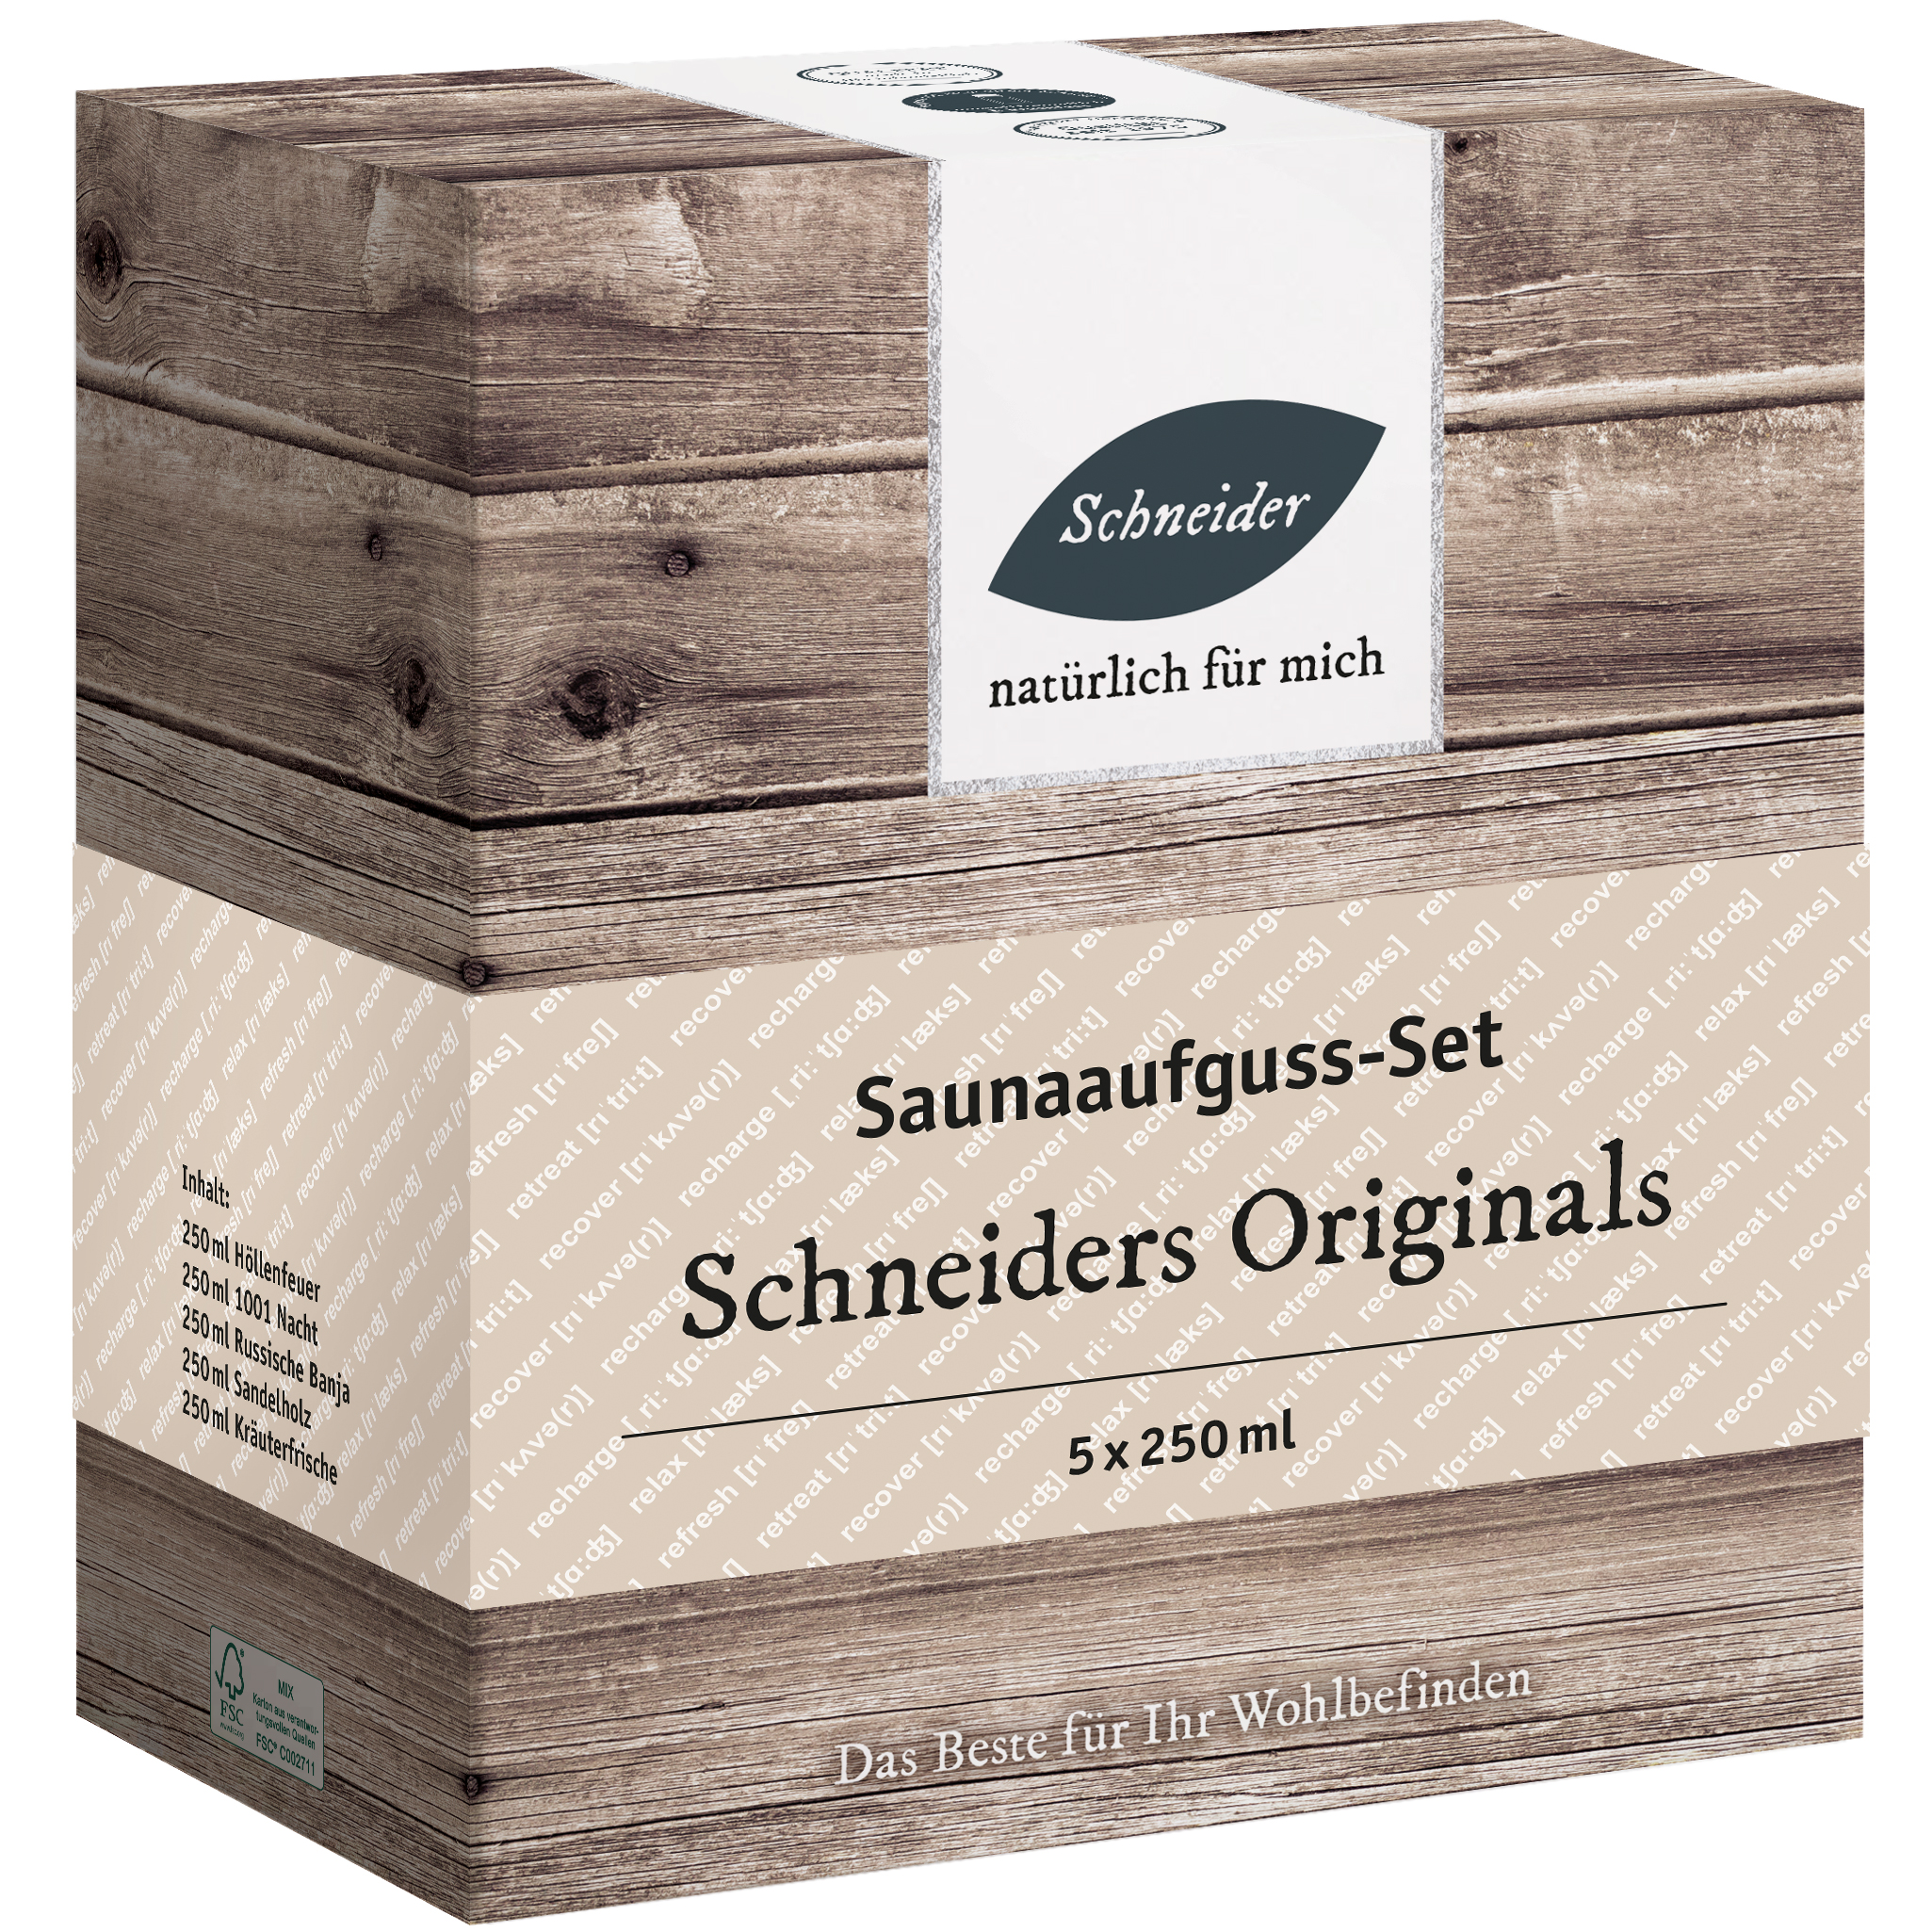 Saunaaufguss-Set - Schneiders Originals